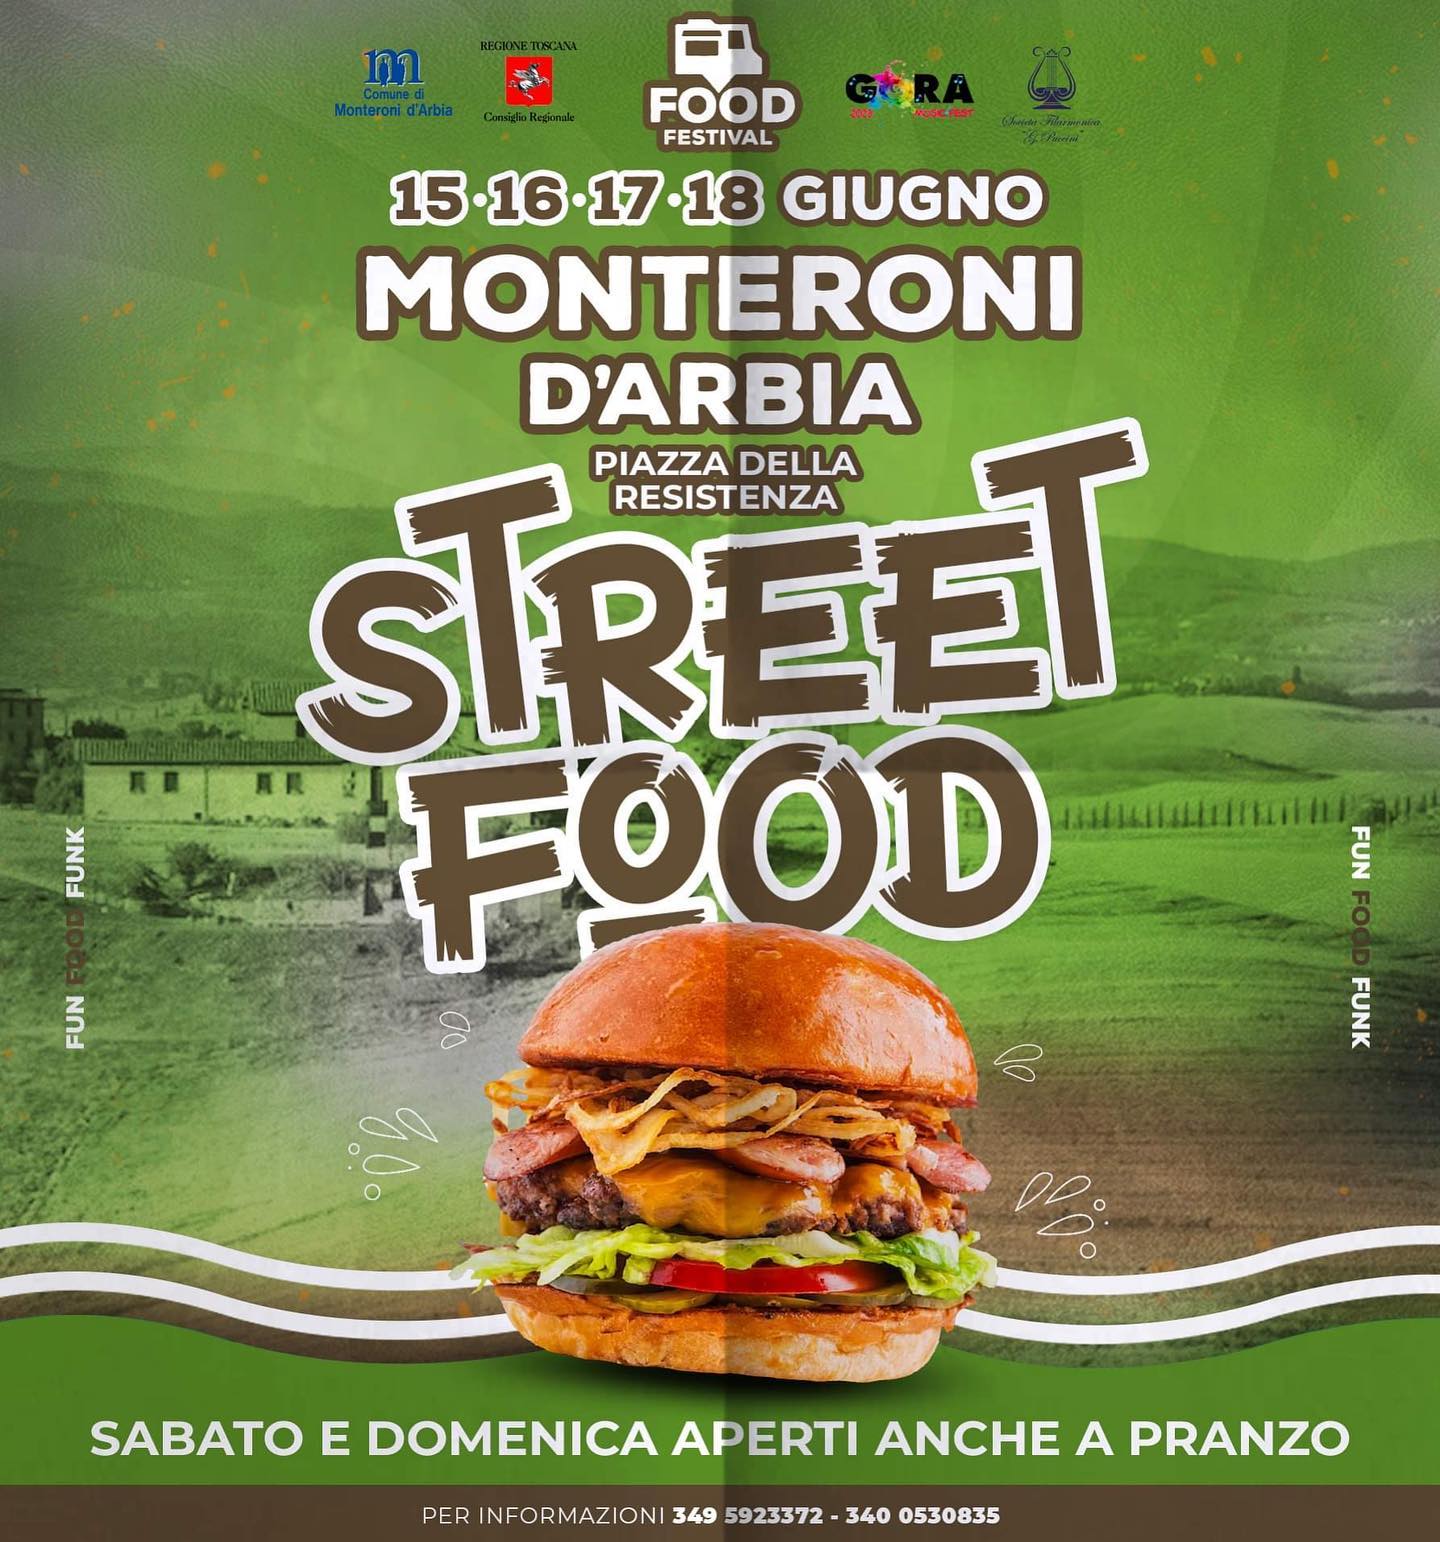 monteroni-d-arbia-street-food-festival